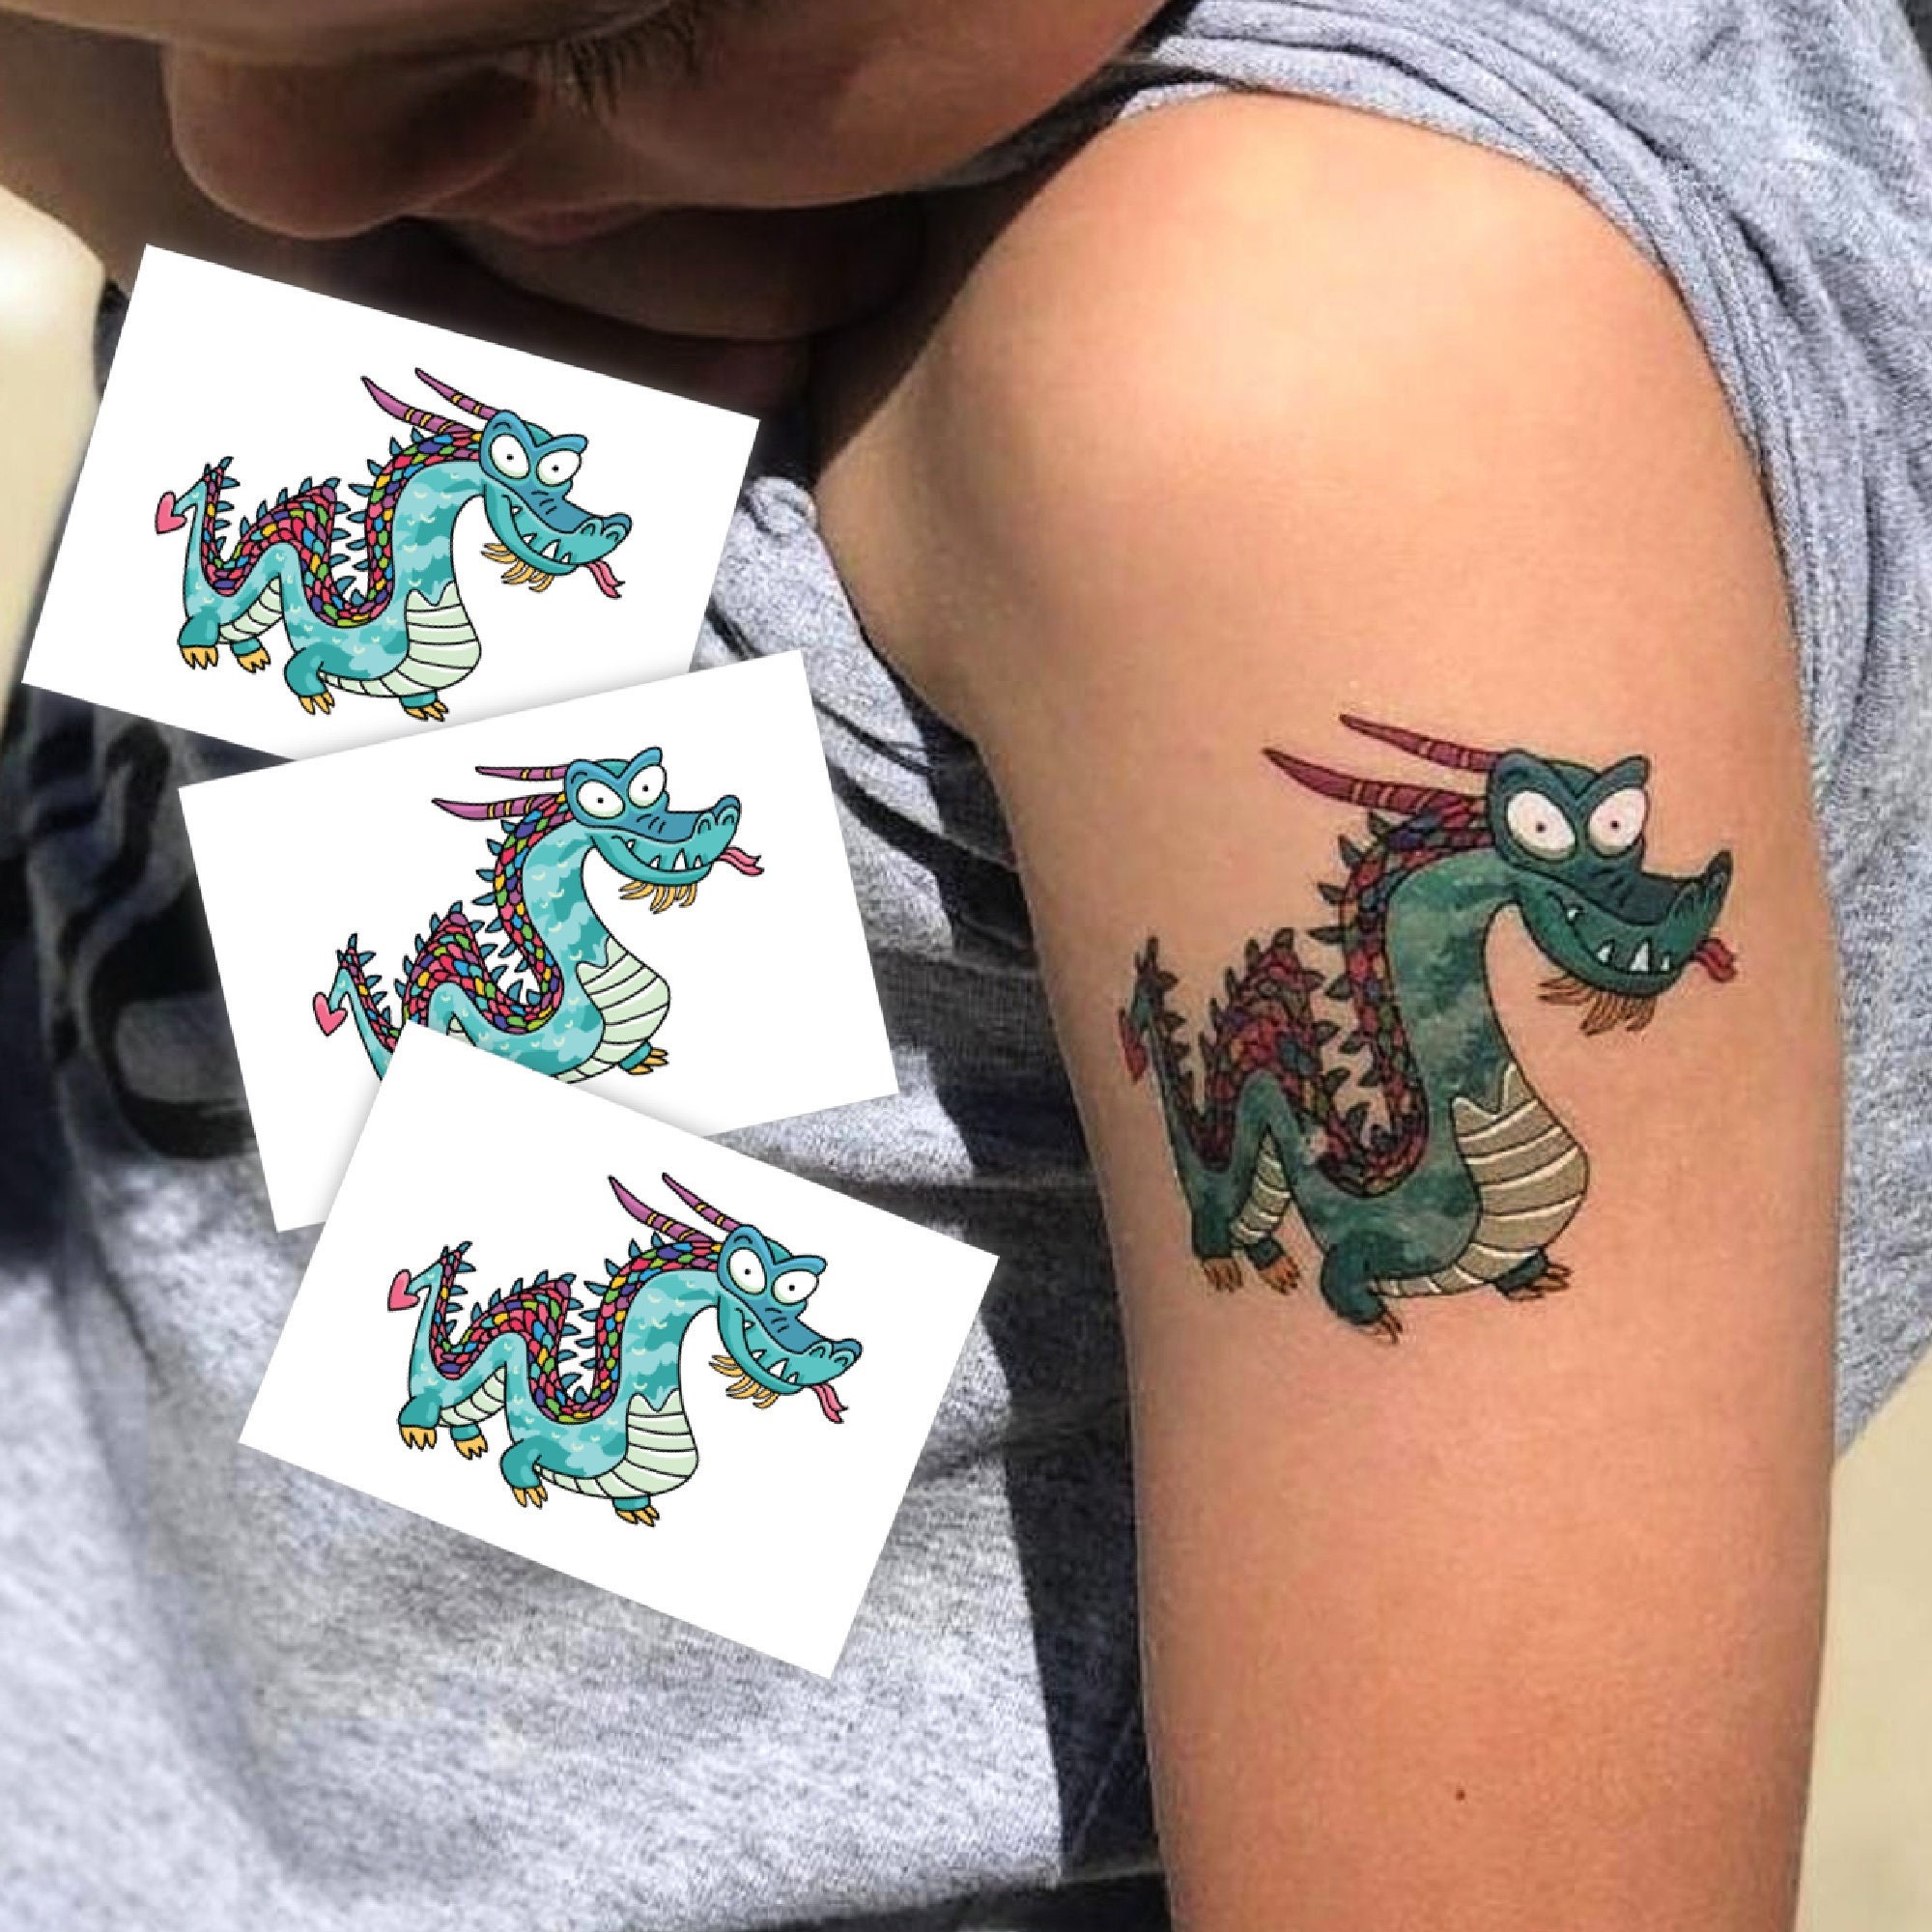 Amazoncom  Dopetattoo 20 Designs Temporary Tattoo Dinosaur for Kids Baby  Dinosaurs Cartoon Dragon Fake Tattoos Baby Dragon Tattoos  Beauty   Personal Care